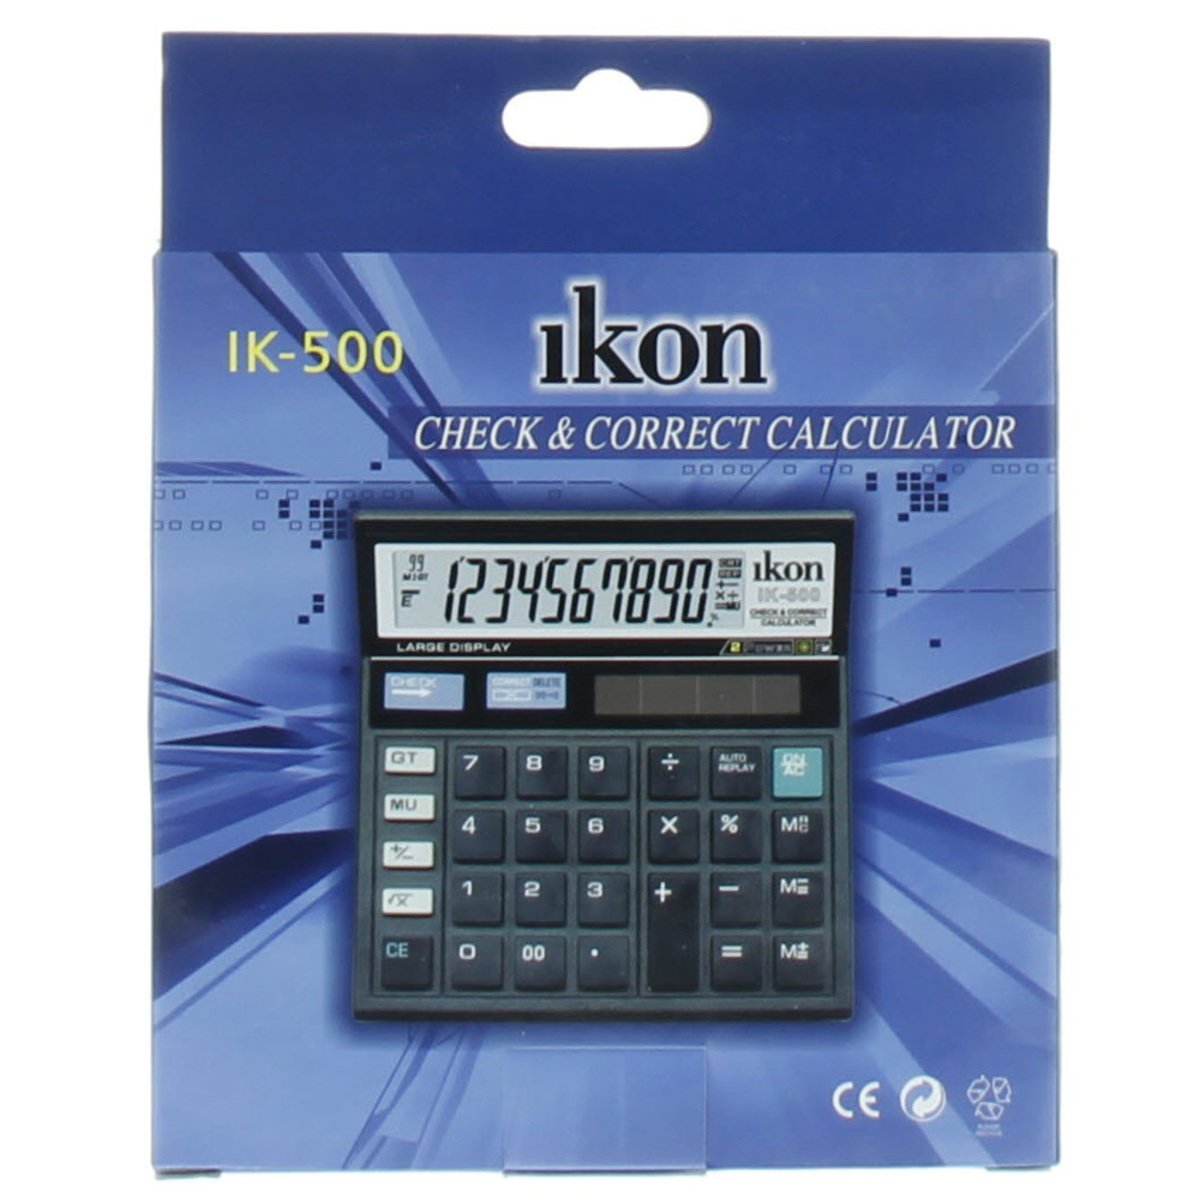 Ikon Check & Correct Calculator IK-500